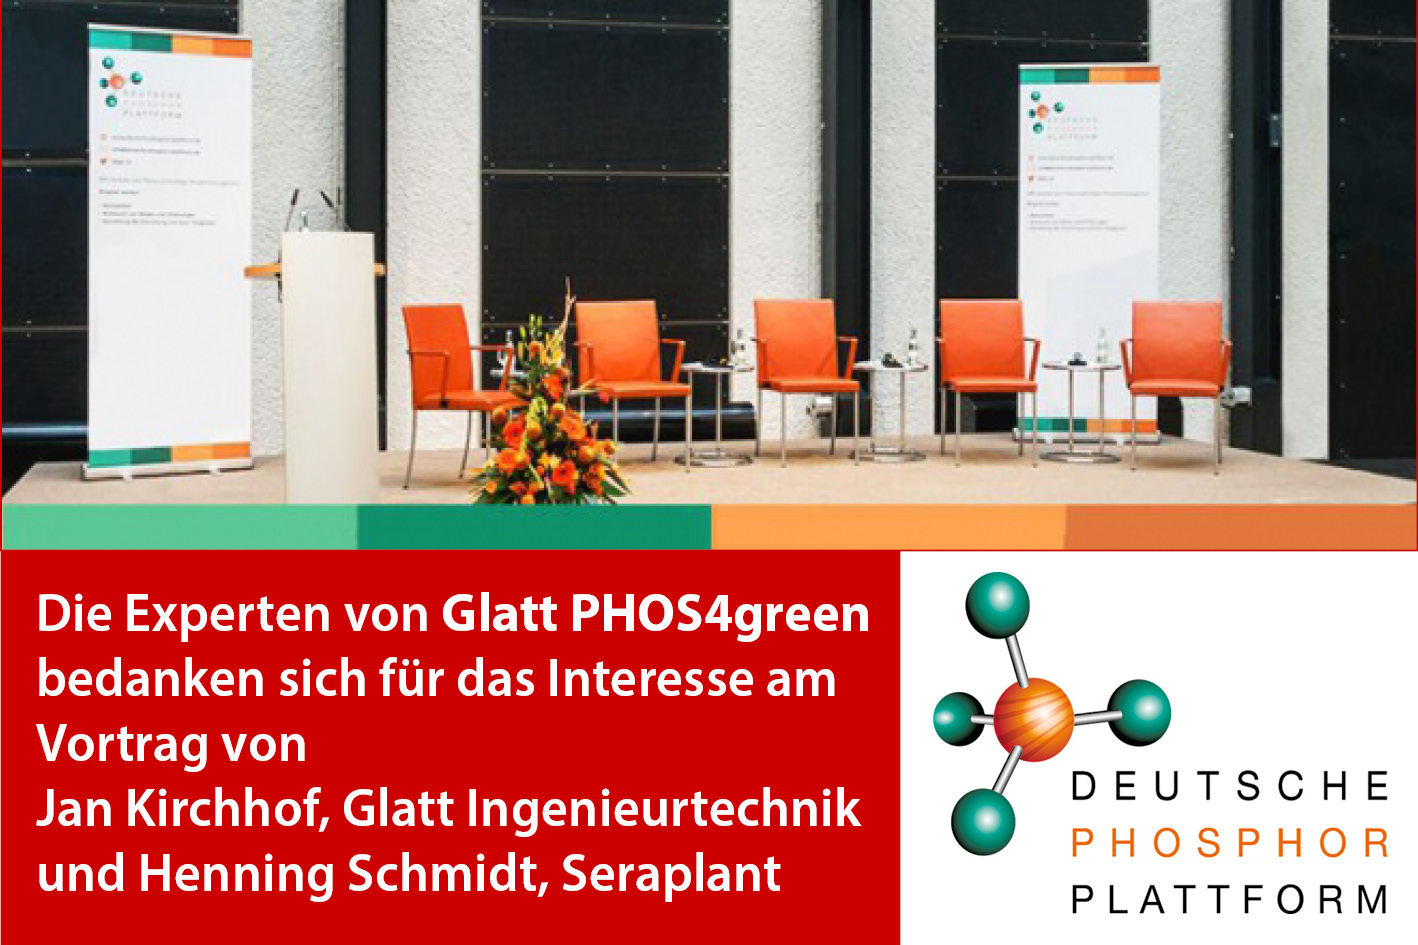 The experts from Glatt PHOS4green would like to thank for the interest in the presentation of Jan Kirchhof, Glatt Ingenieurtechnik, and Henning Schmidt, Seraplant